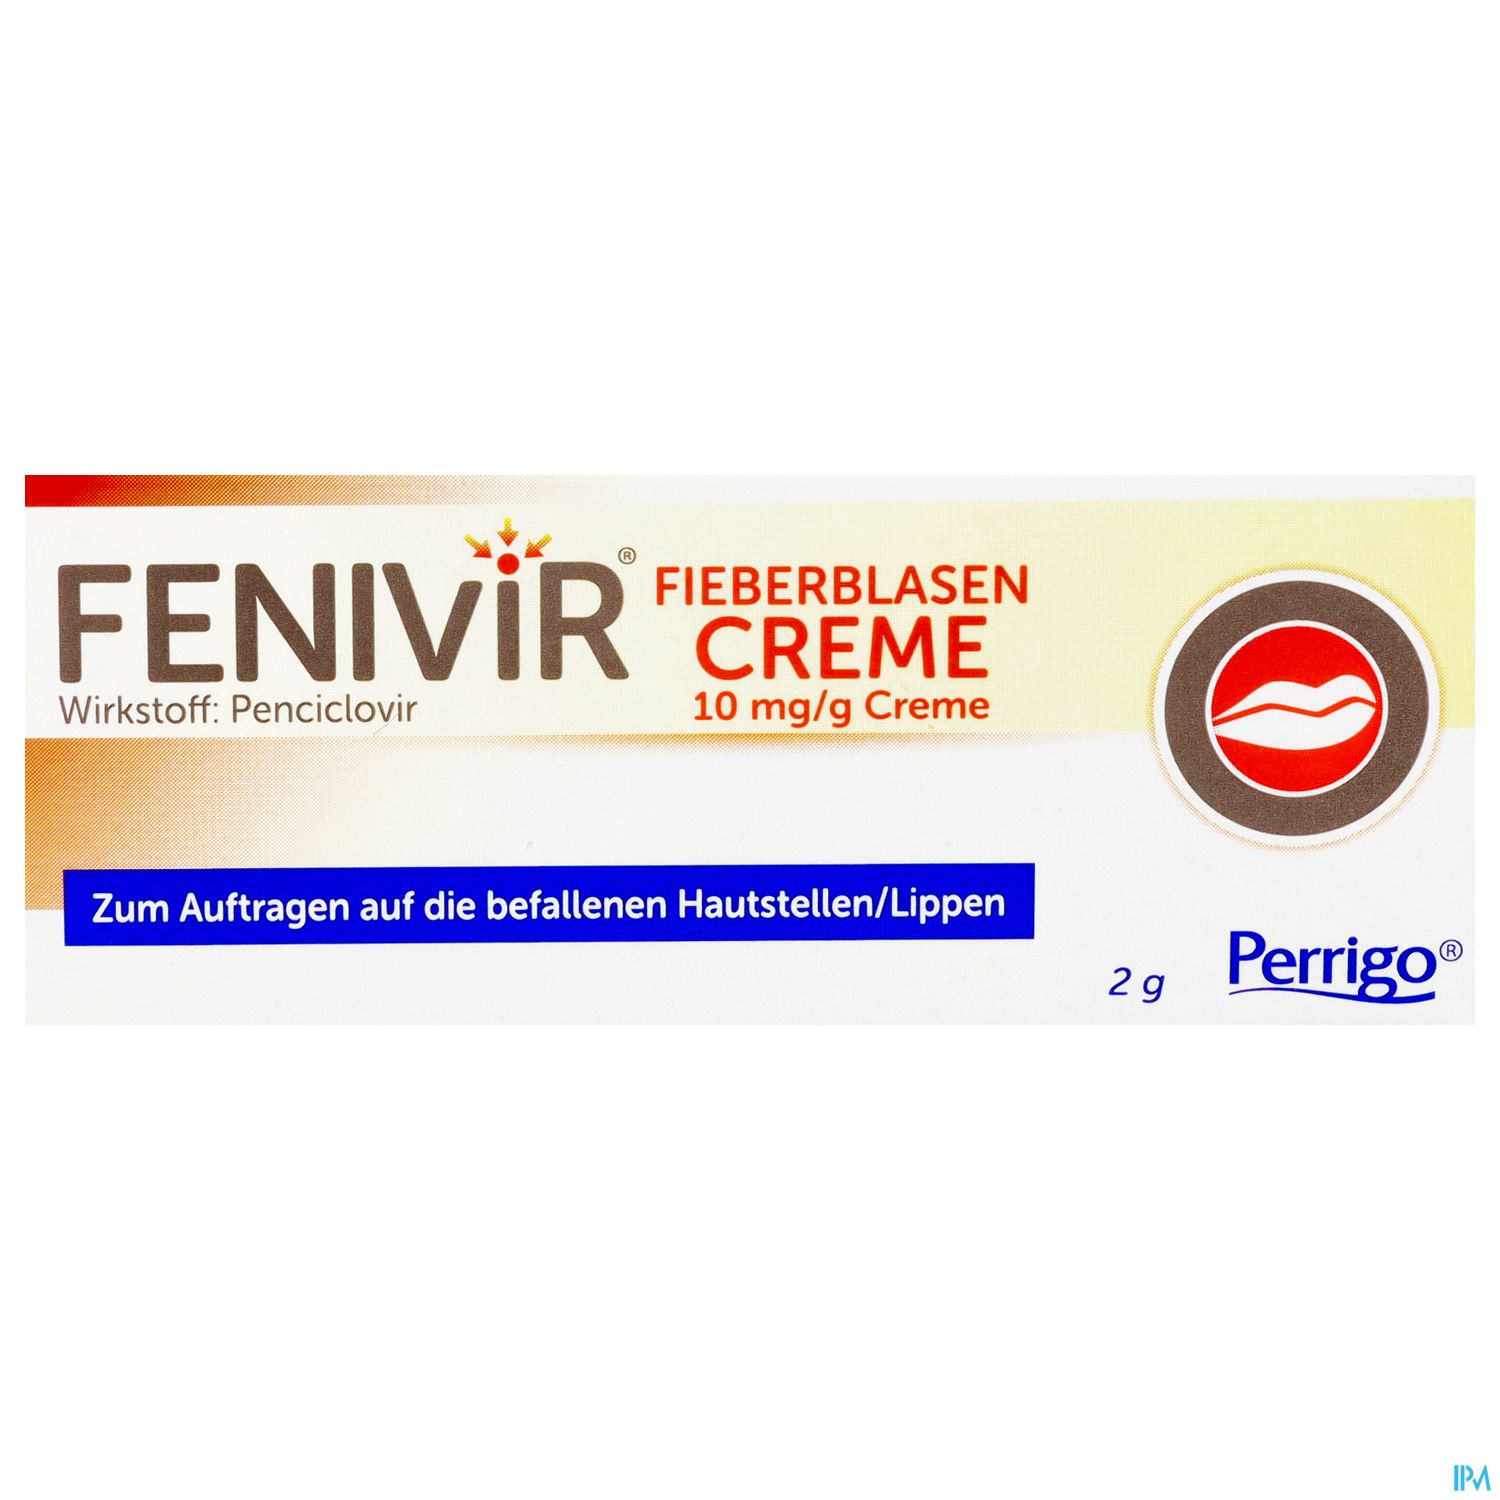 Fenivir - Fieberblasencreme